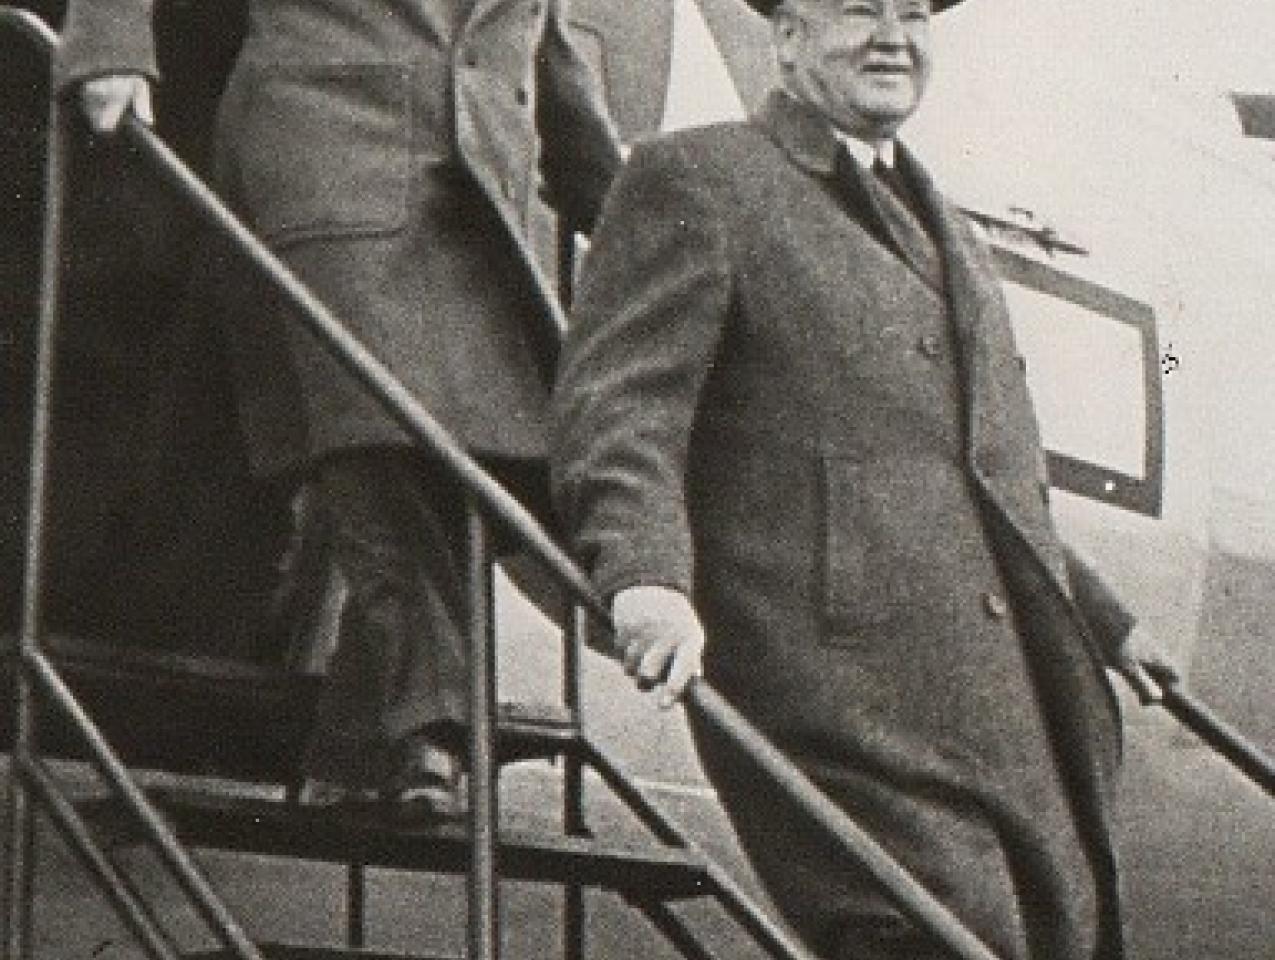 Herbert Hoover (right) and Hugh Gibson